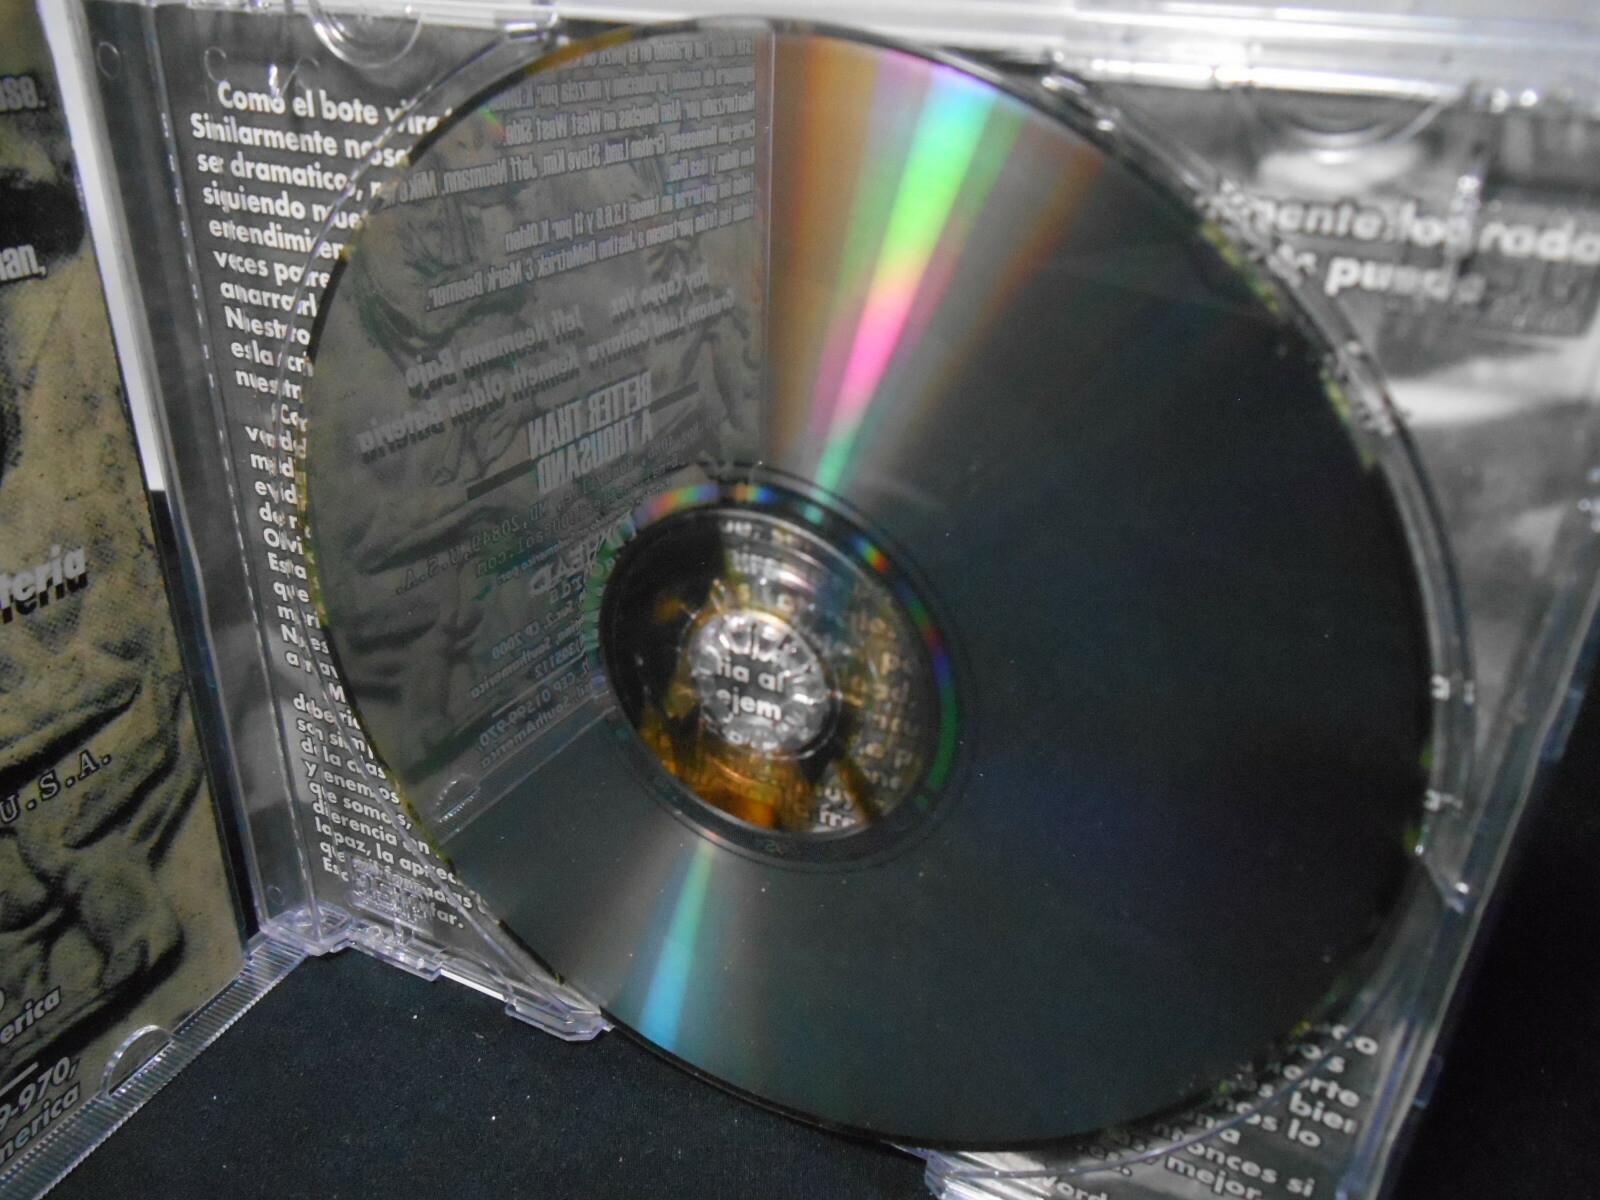 CD - Better Than A Thousand - Value Driven (IMP)